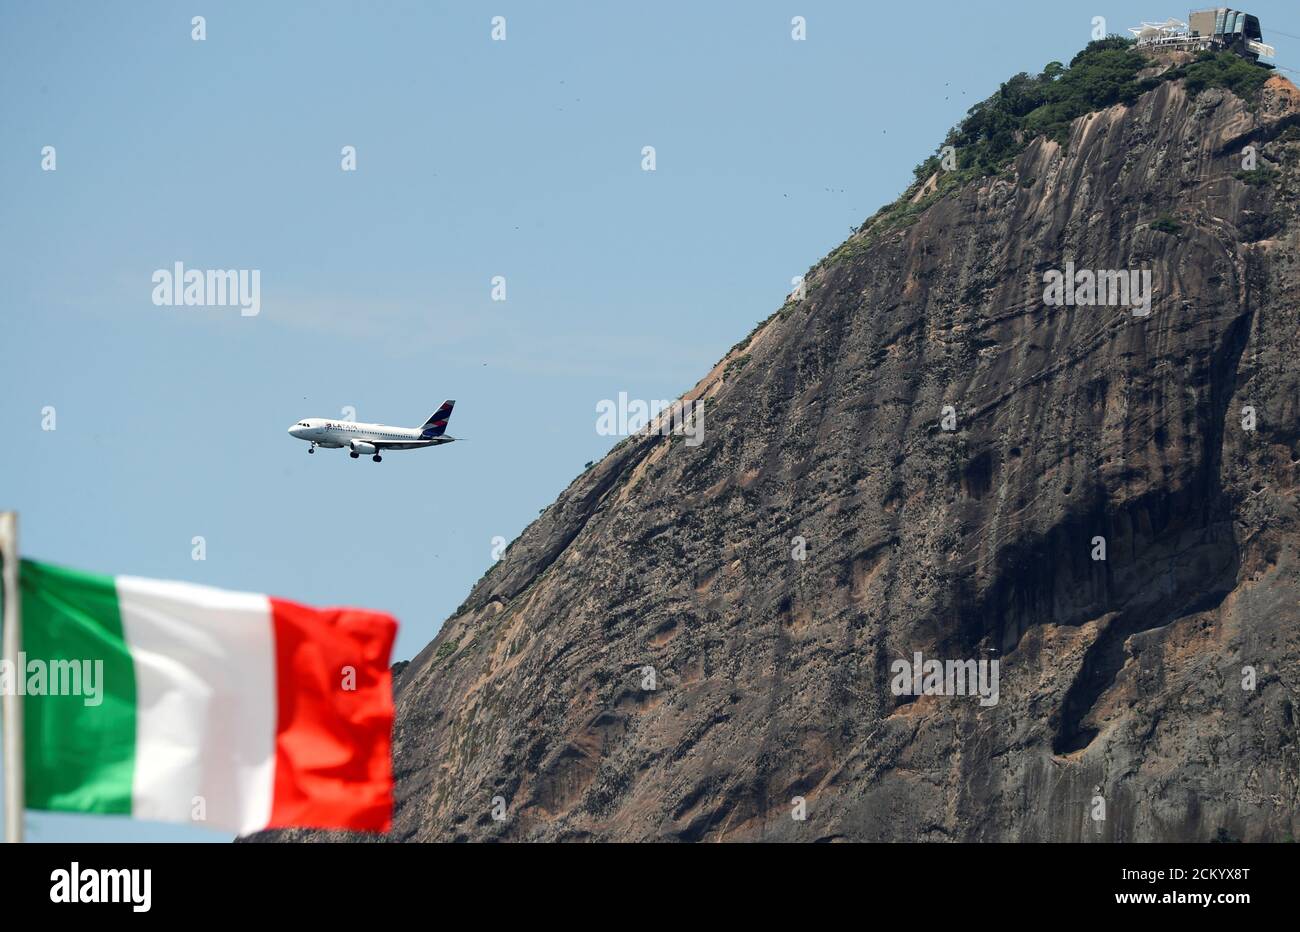 Latam airlines brasil fotografías e imágenes de alta resolución - Alamy